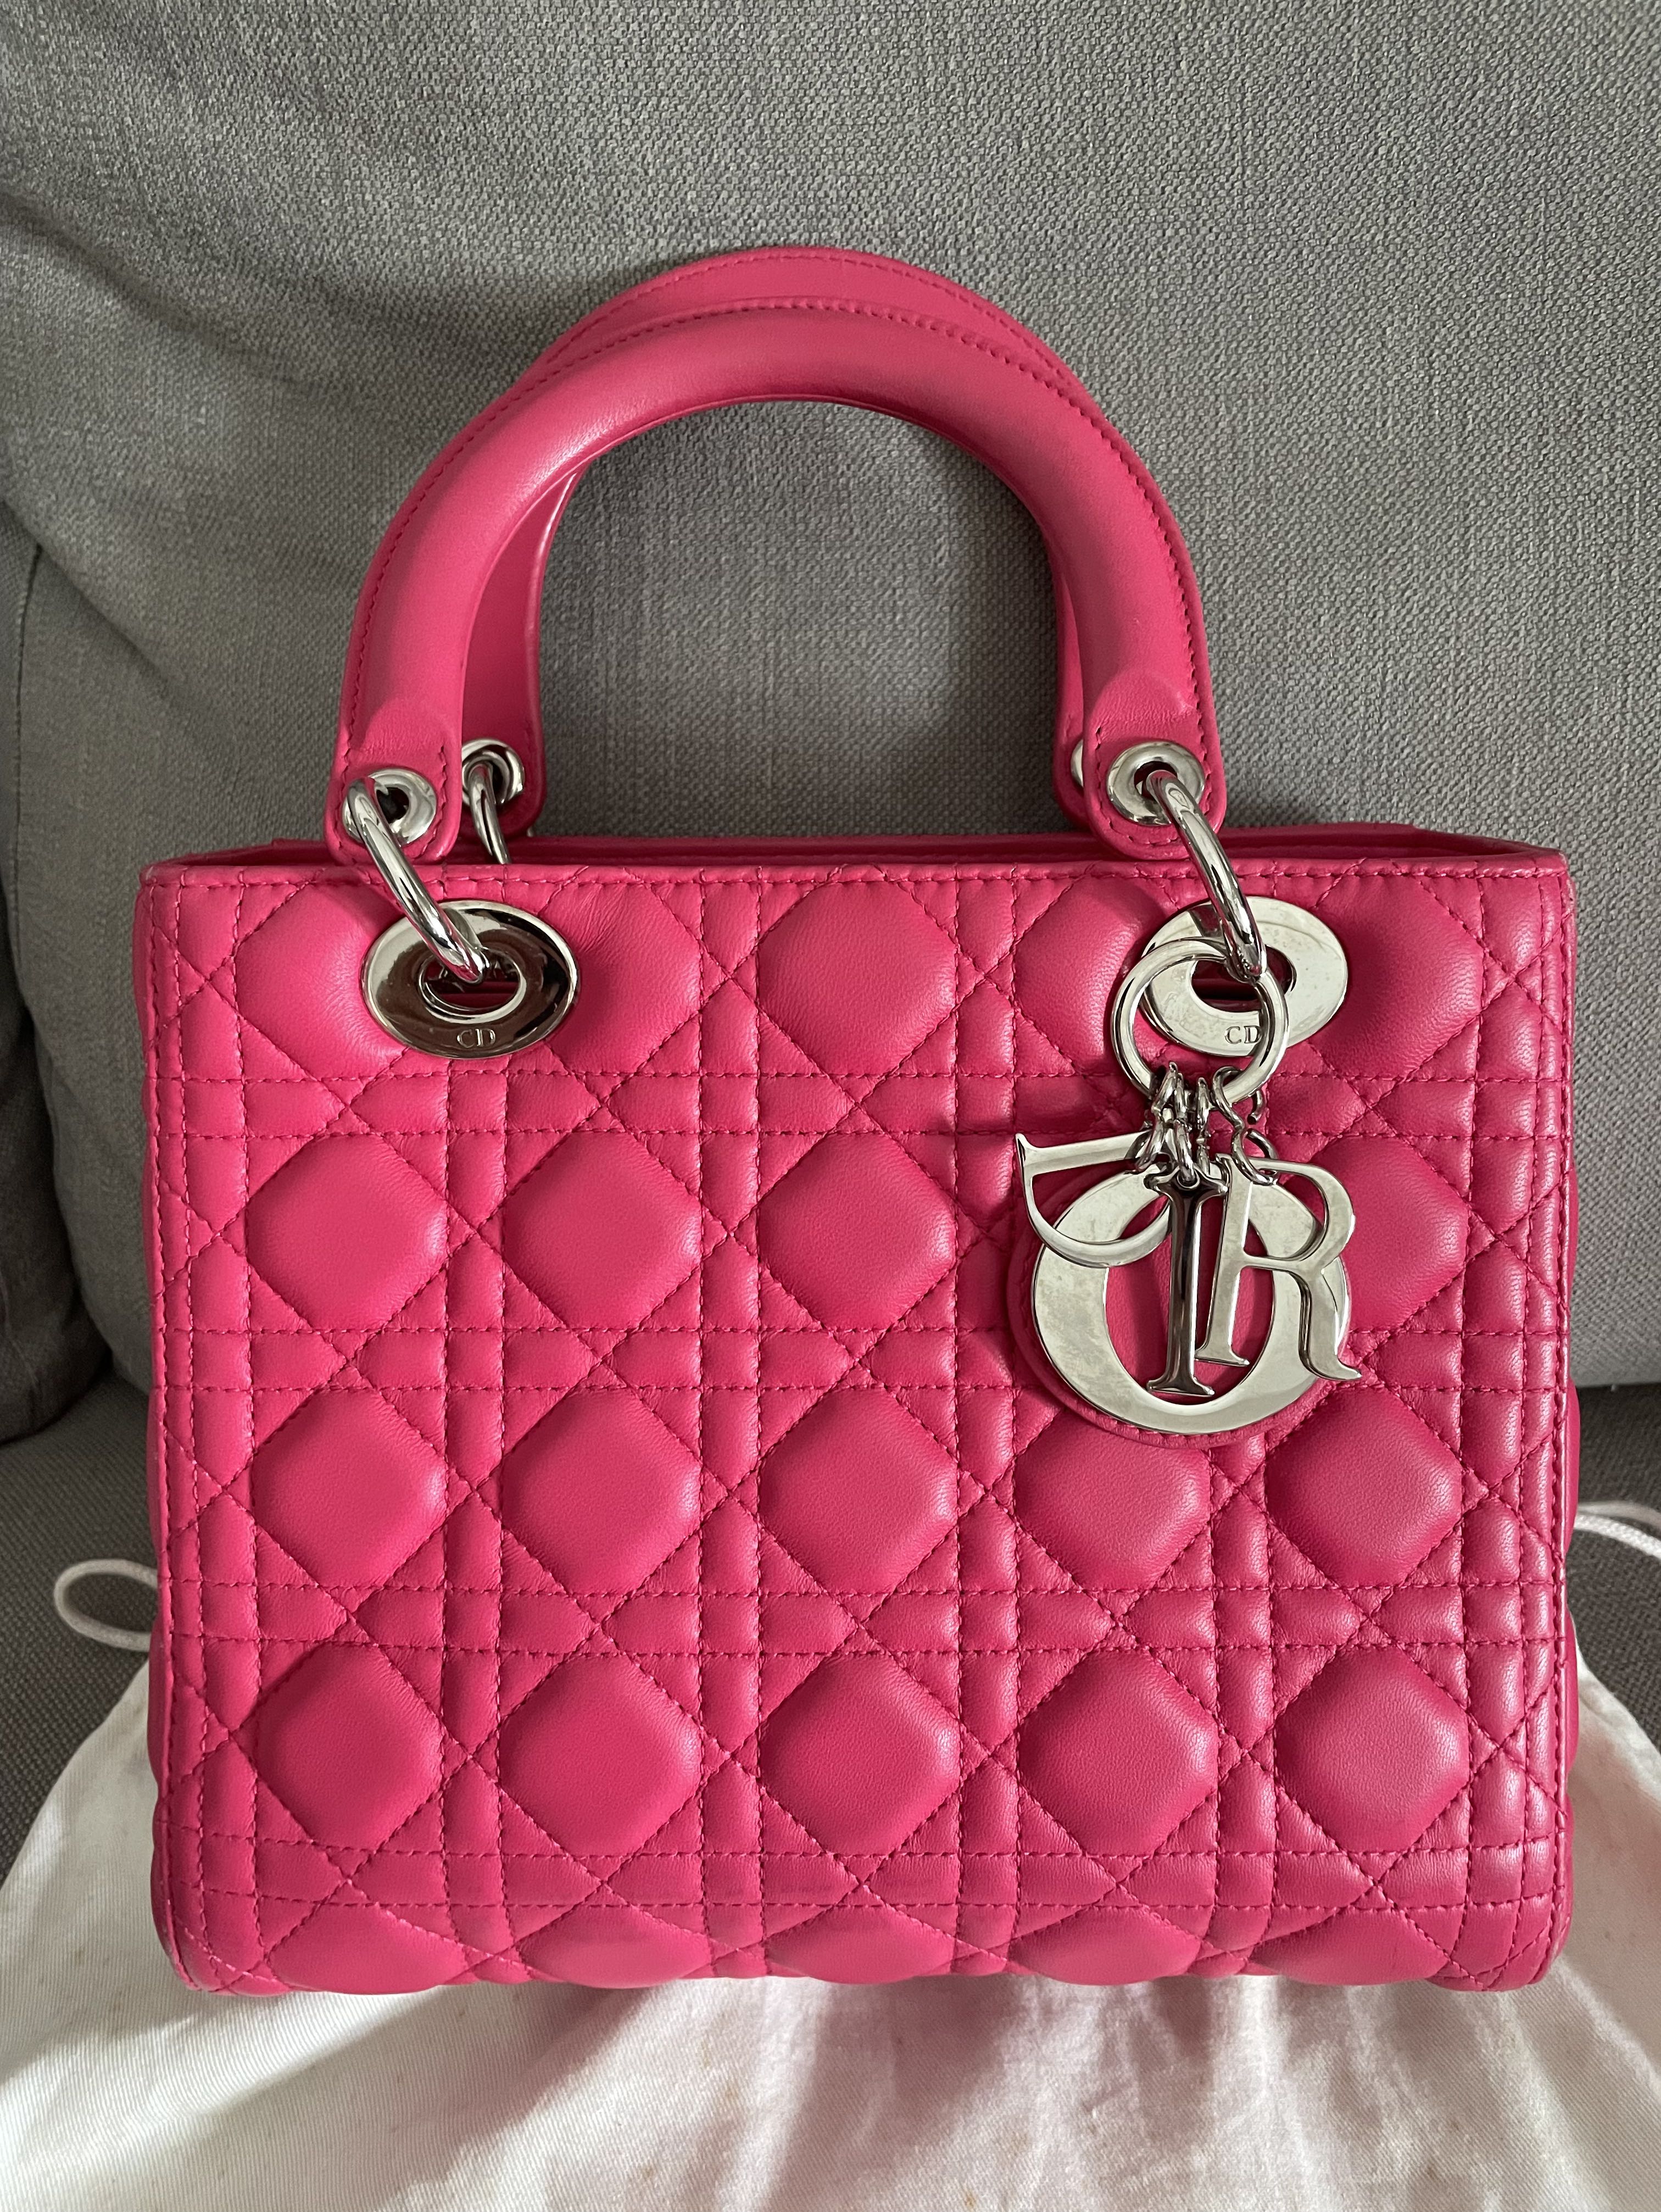 Return  Christian Dior Lady Dior Medium Bag in Hot Pink Lambskin with Gold  HardwareChristian DiorBRANDSMILAN CLASSIC Luxury Trade Company Since 2007